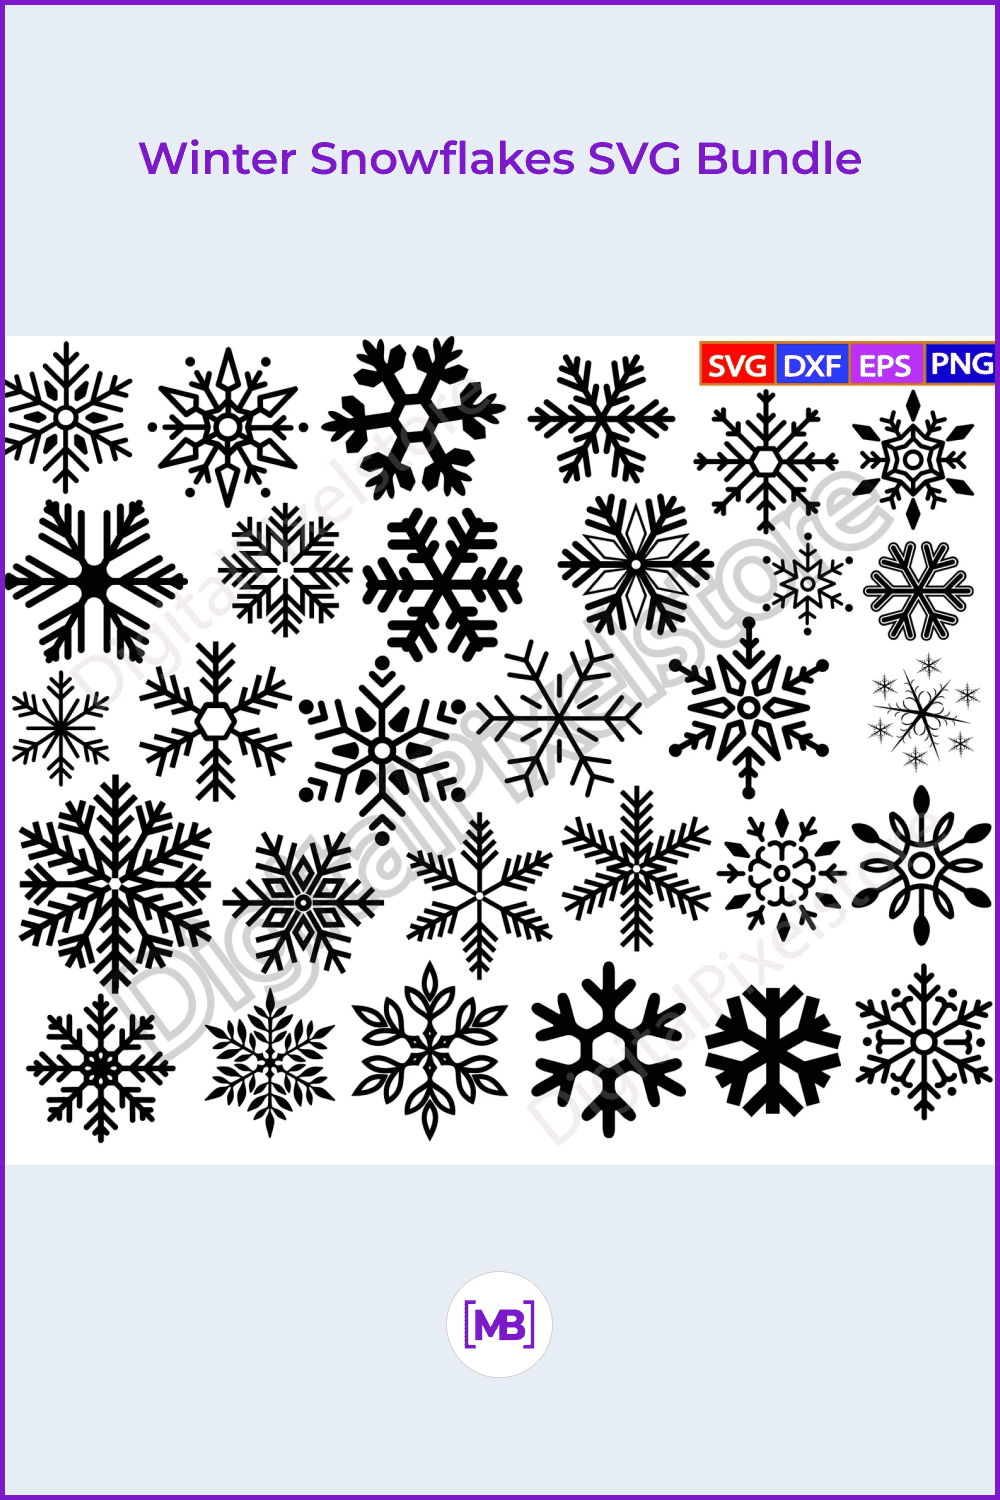 Winter Snowflakes SVG Bundle.